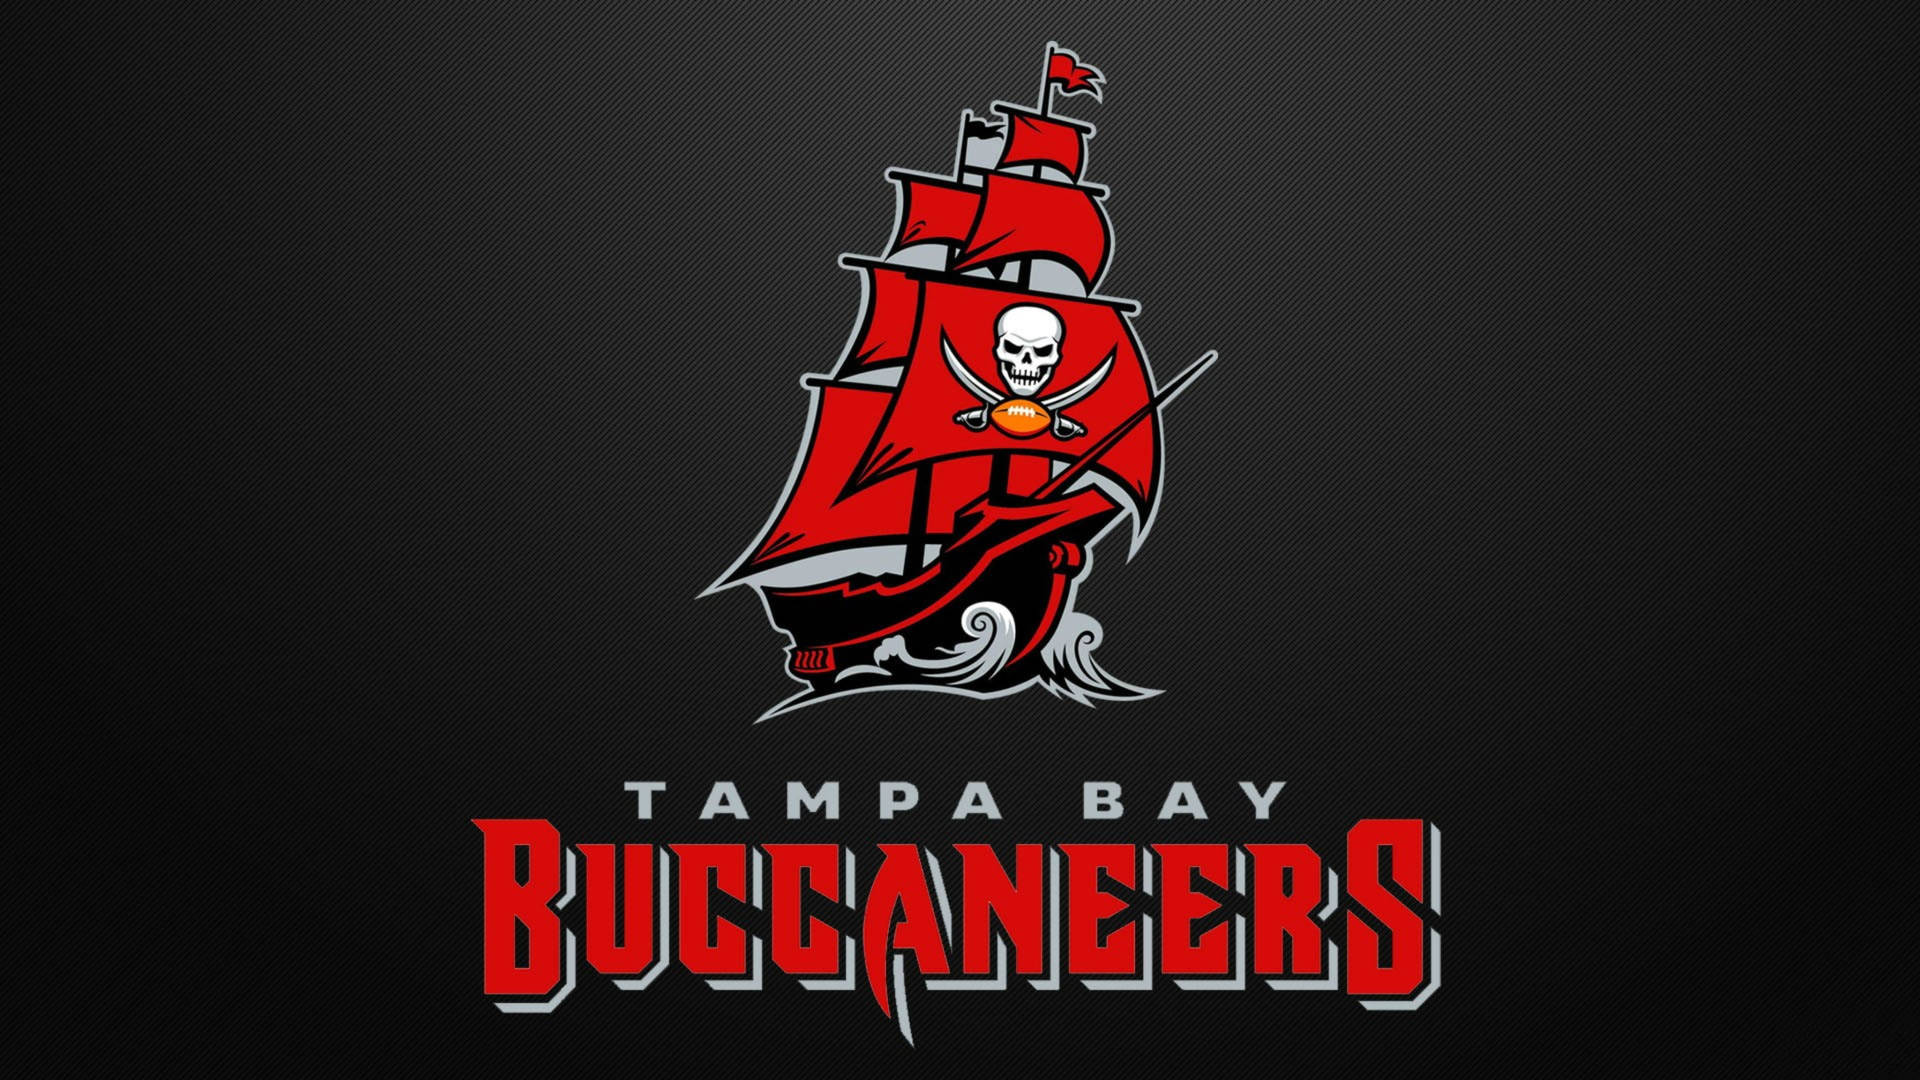 Tampa Bay Buccaneers Ship Art Background